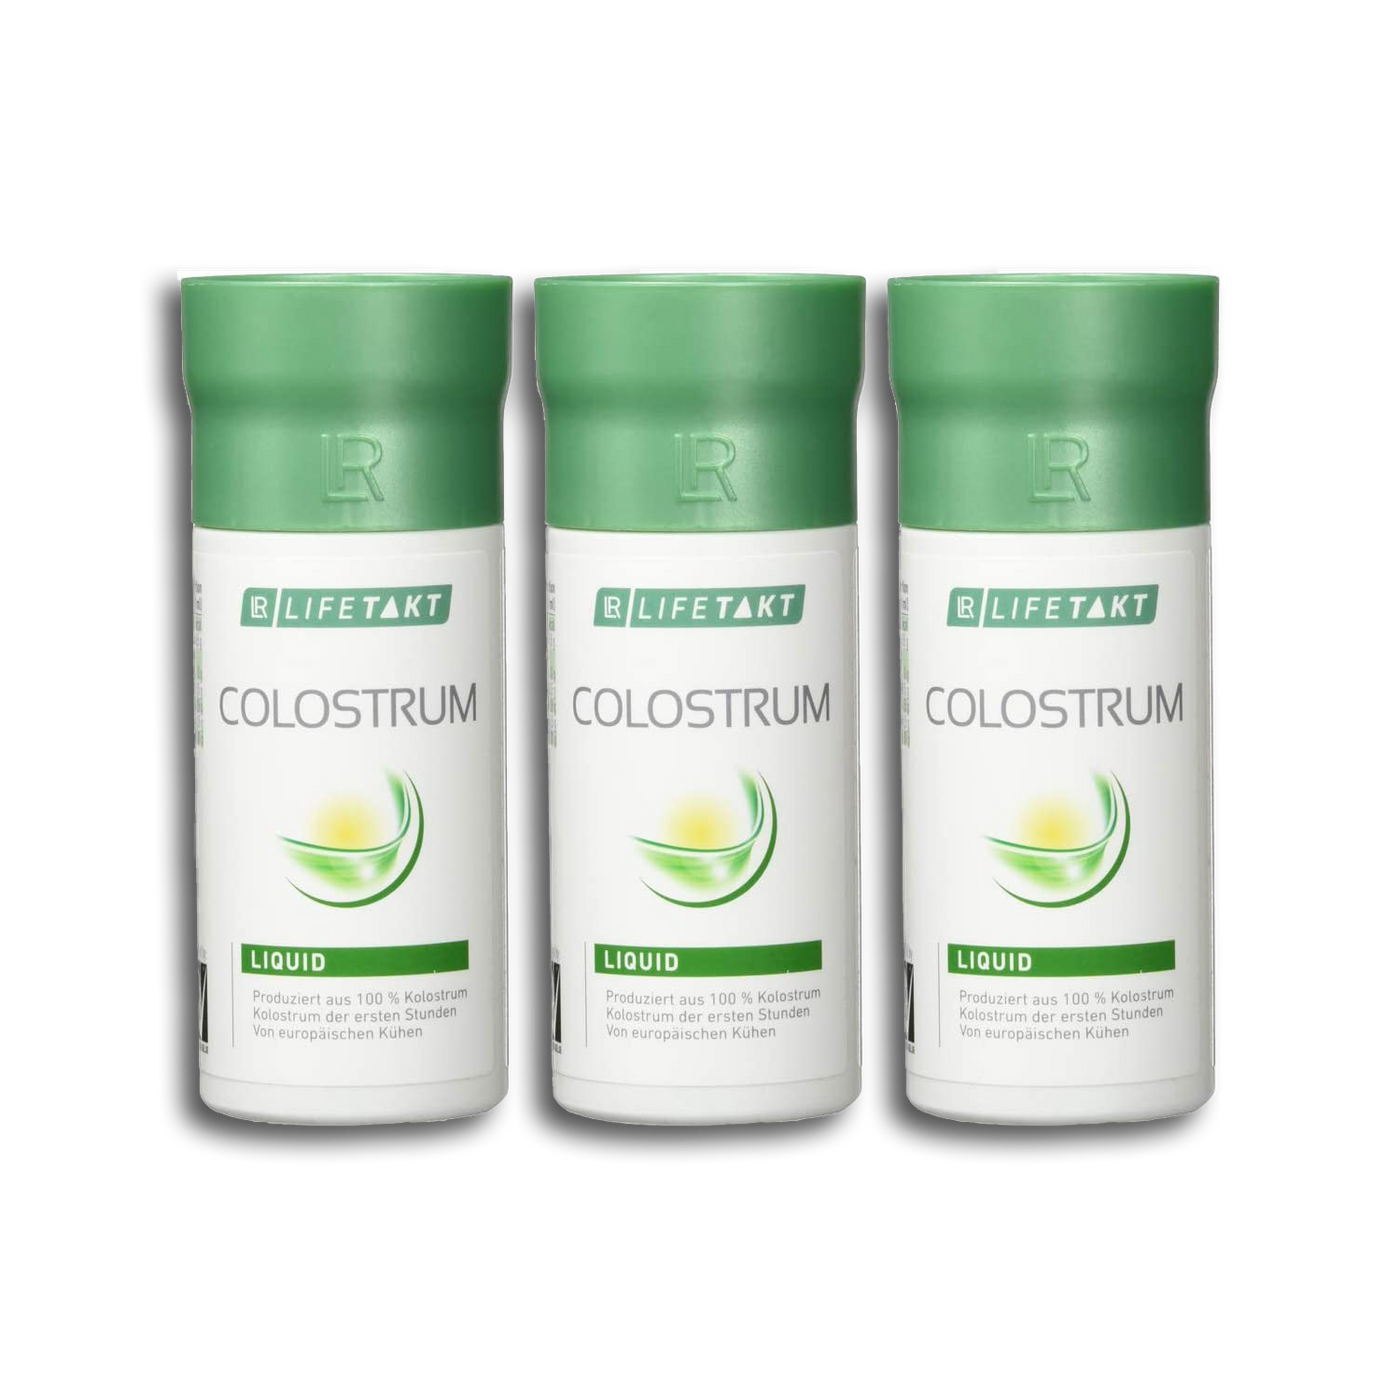 LR LIFETAKT Colostrum Liquid 3x125 ml